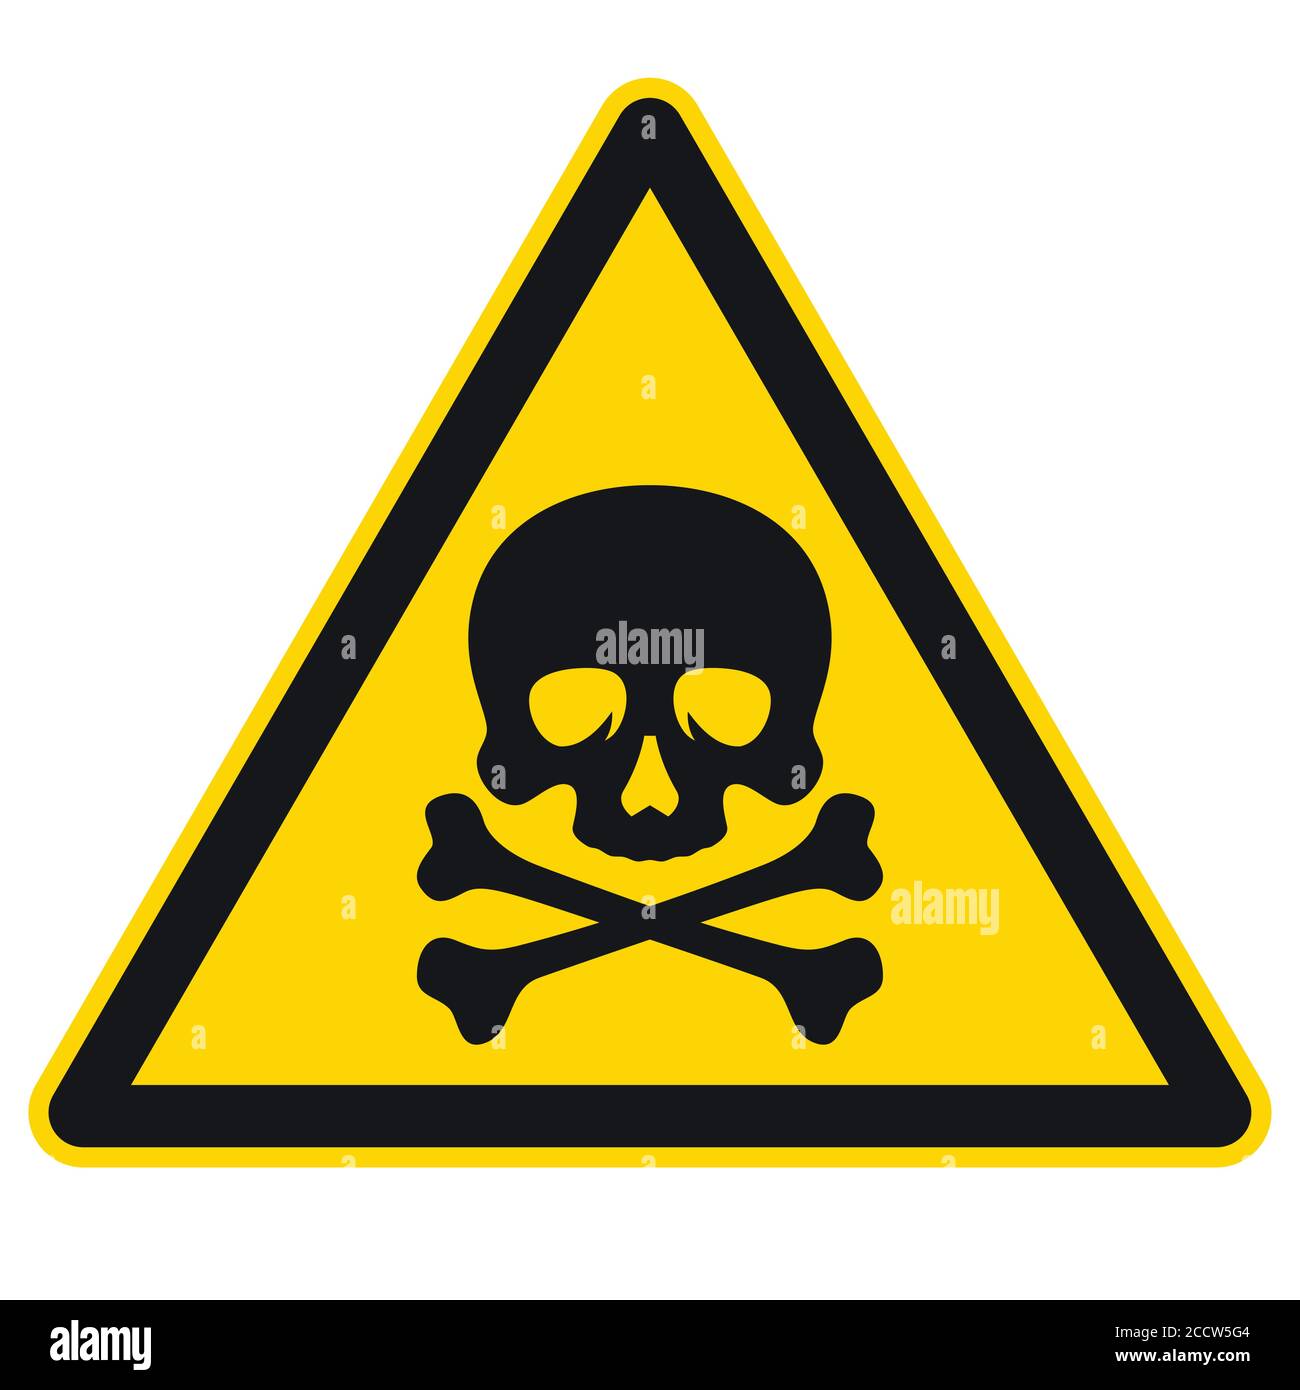 Danger sign with skull and crossbones vector illustration. Warning sign Stock Vector